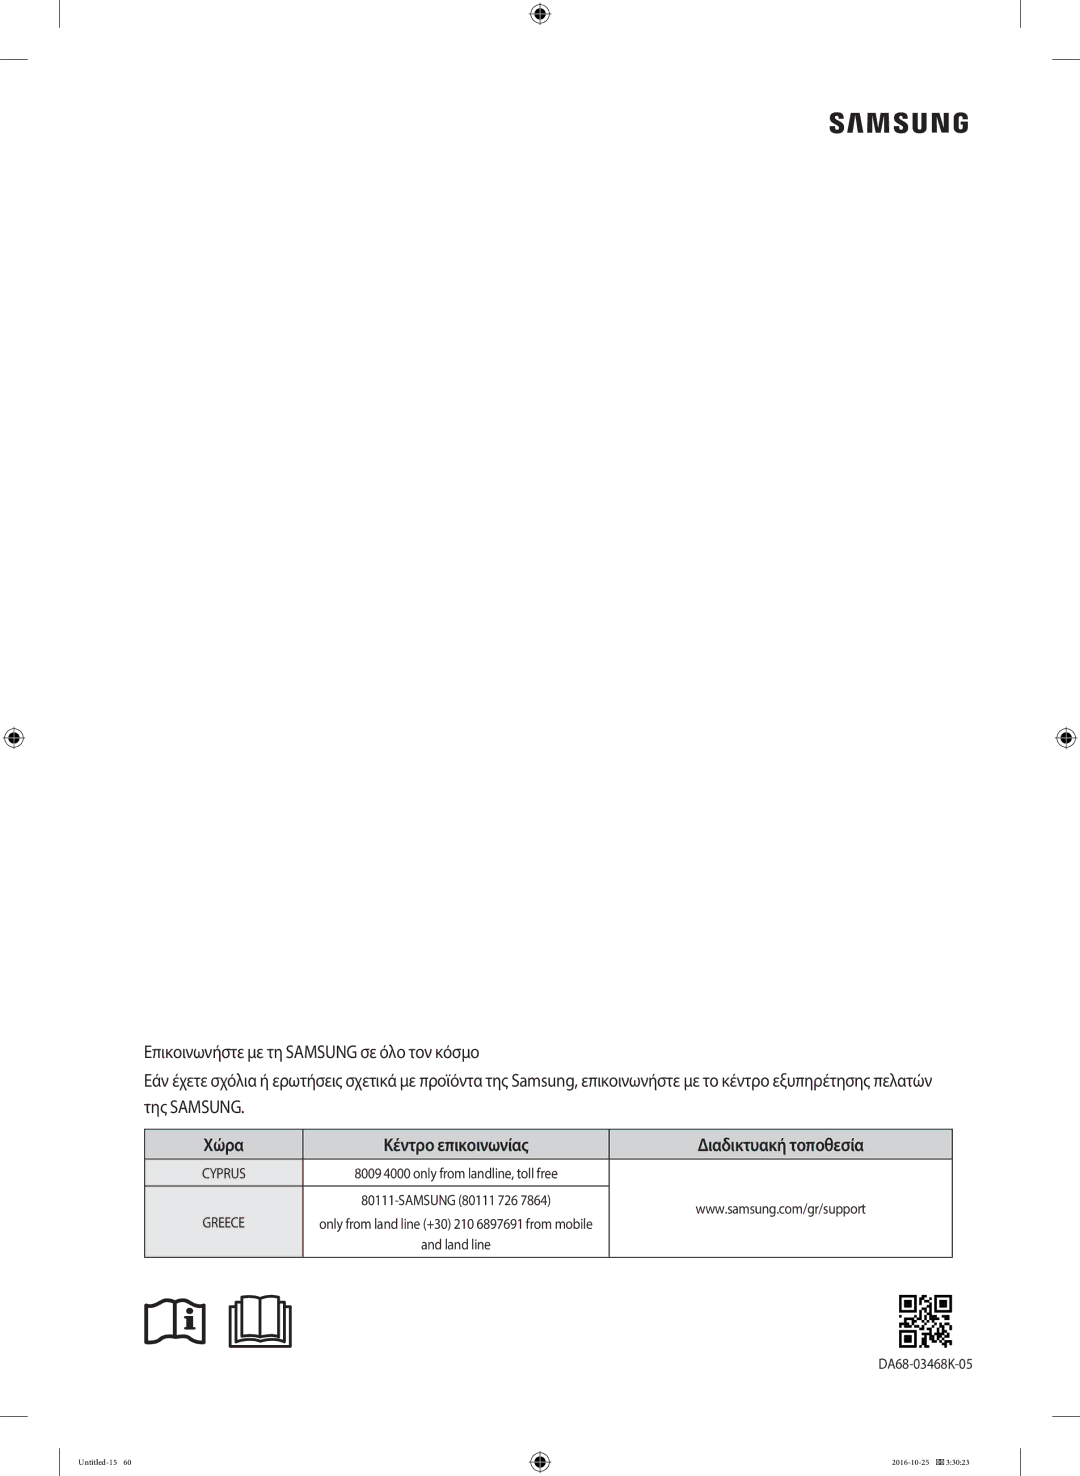 Samsung RS53K4400SA/EF manual Χώρα Κέντρο επικοινωνίας Διαδικτυακή τοποθεσία 